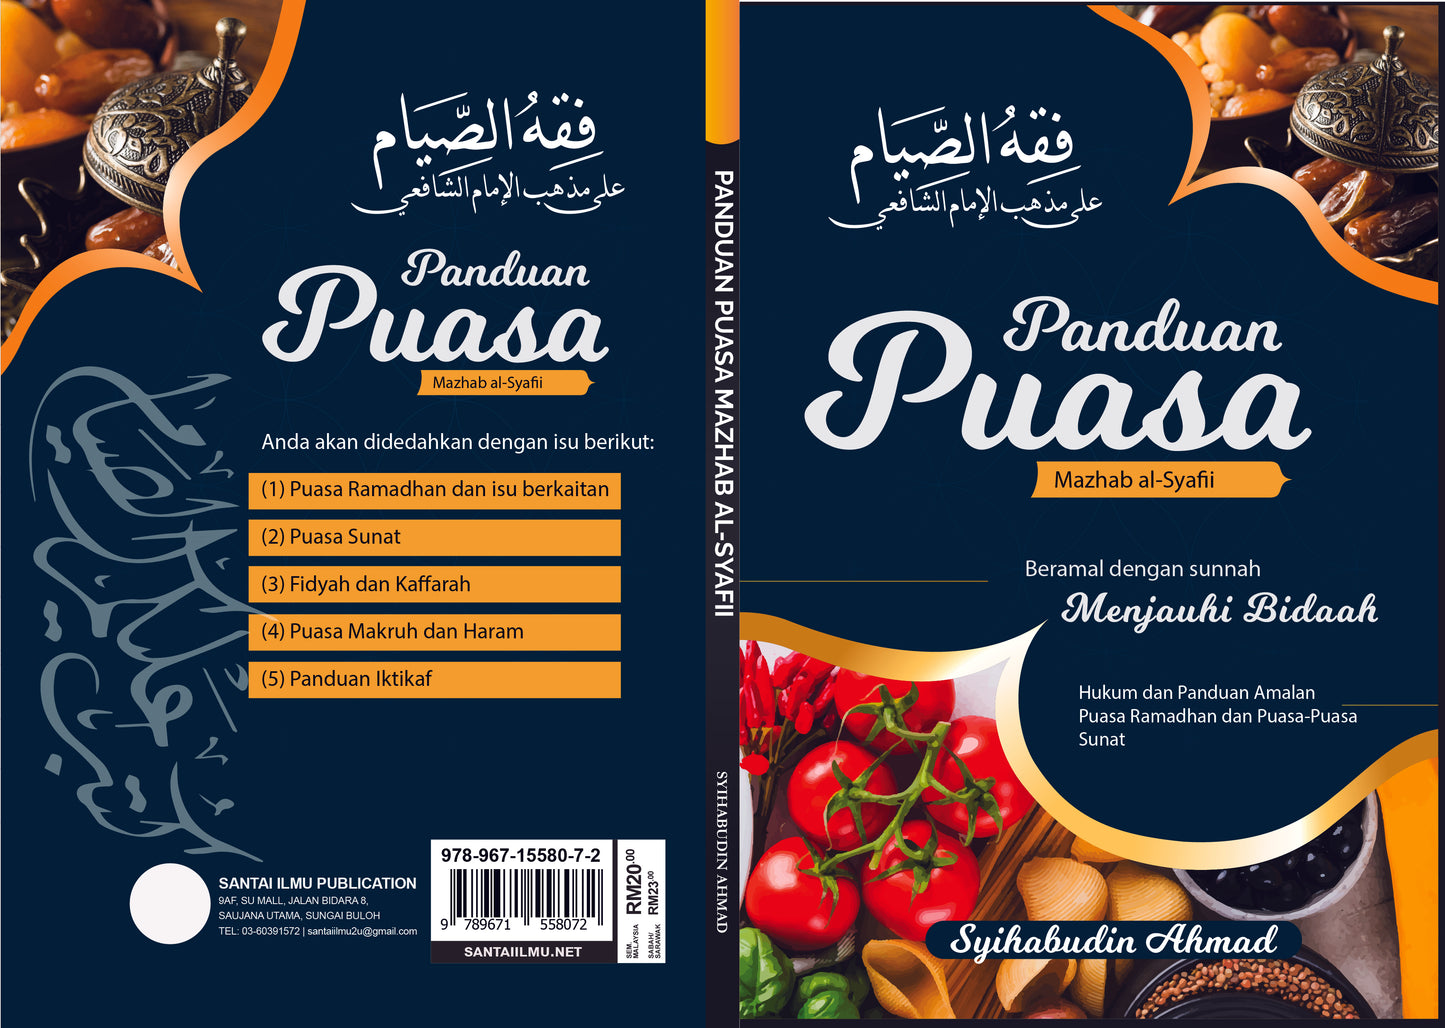 Panduan Puasa Mazhab Al-Syafii by Syihabudin Ahmad